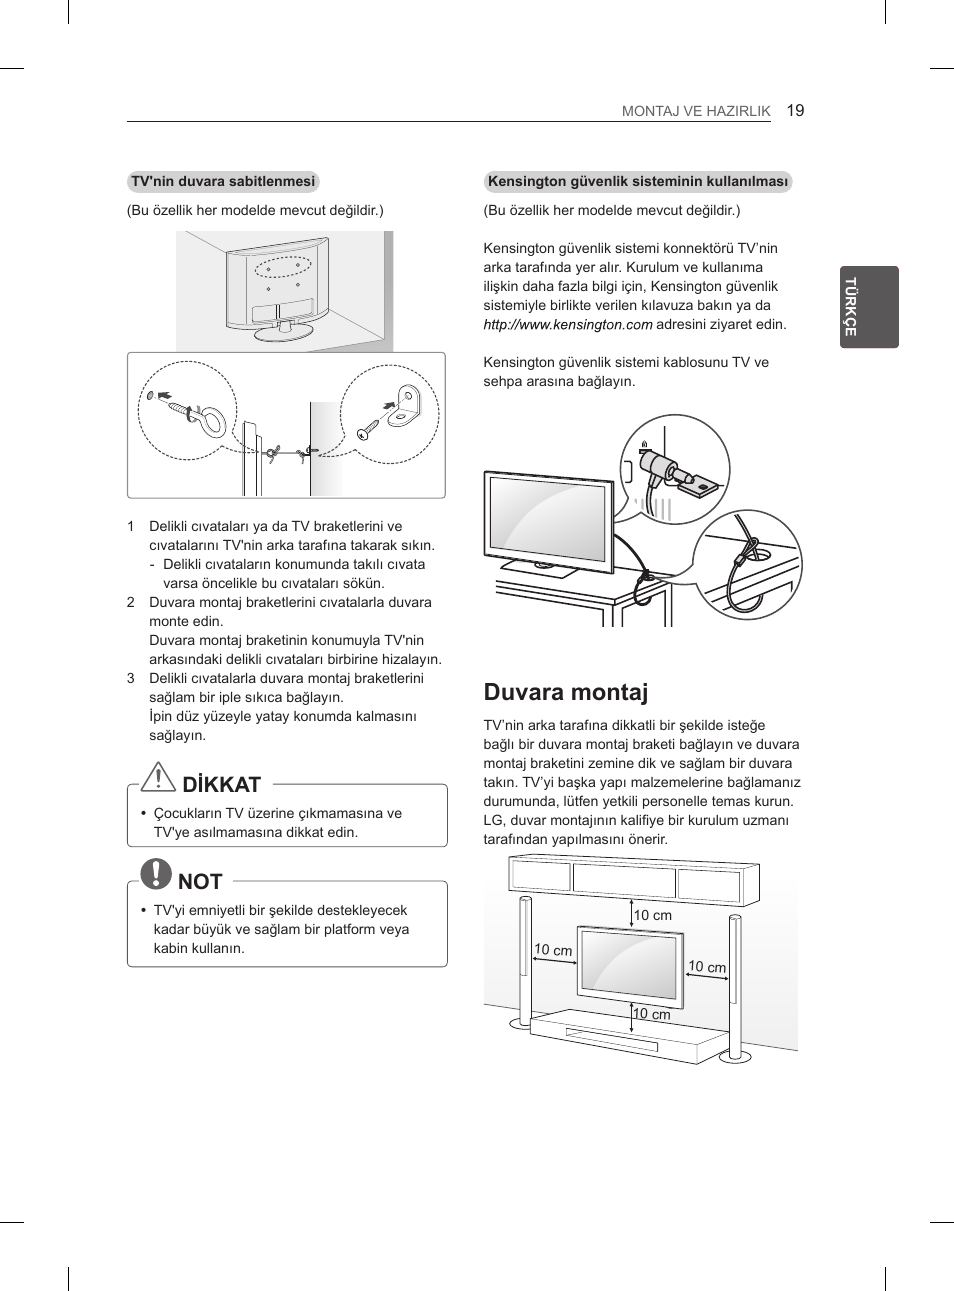 Duvara montaj, Dikkat | LG 47LS5600 User Manual | Page 49 / 73